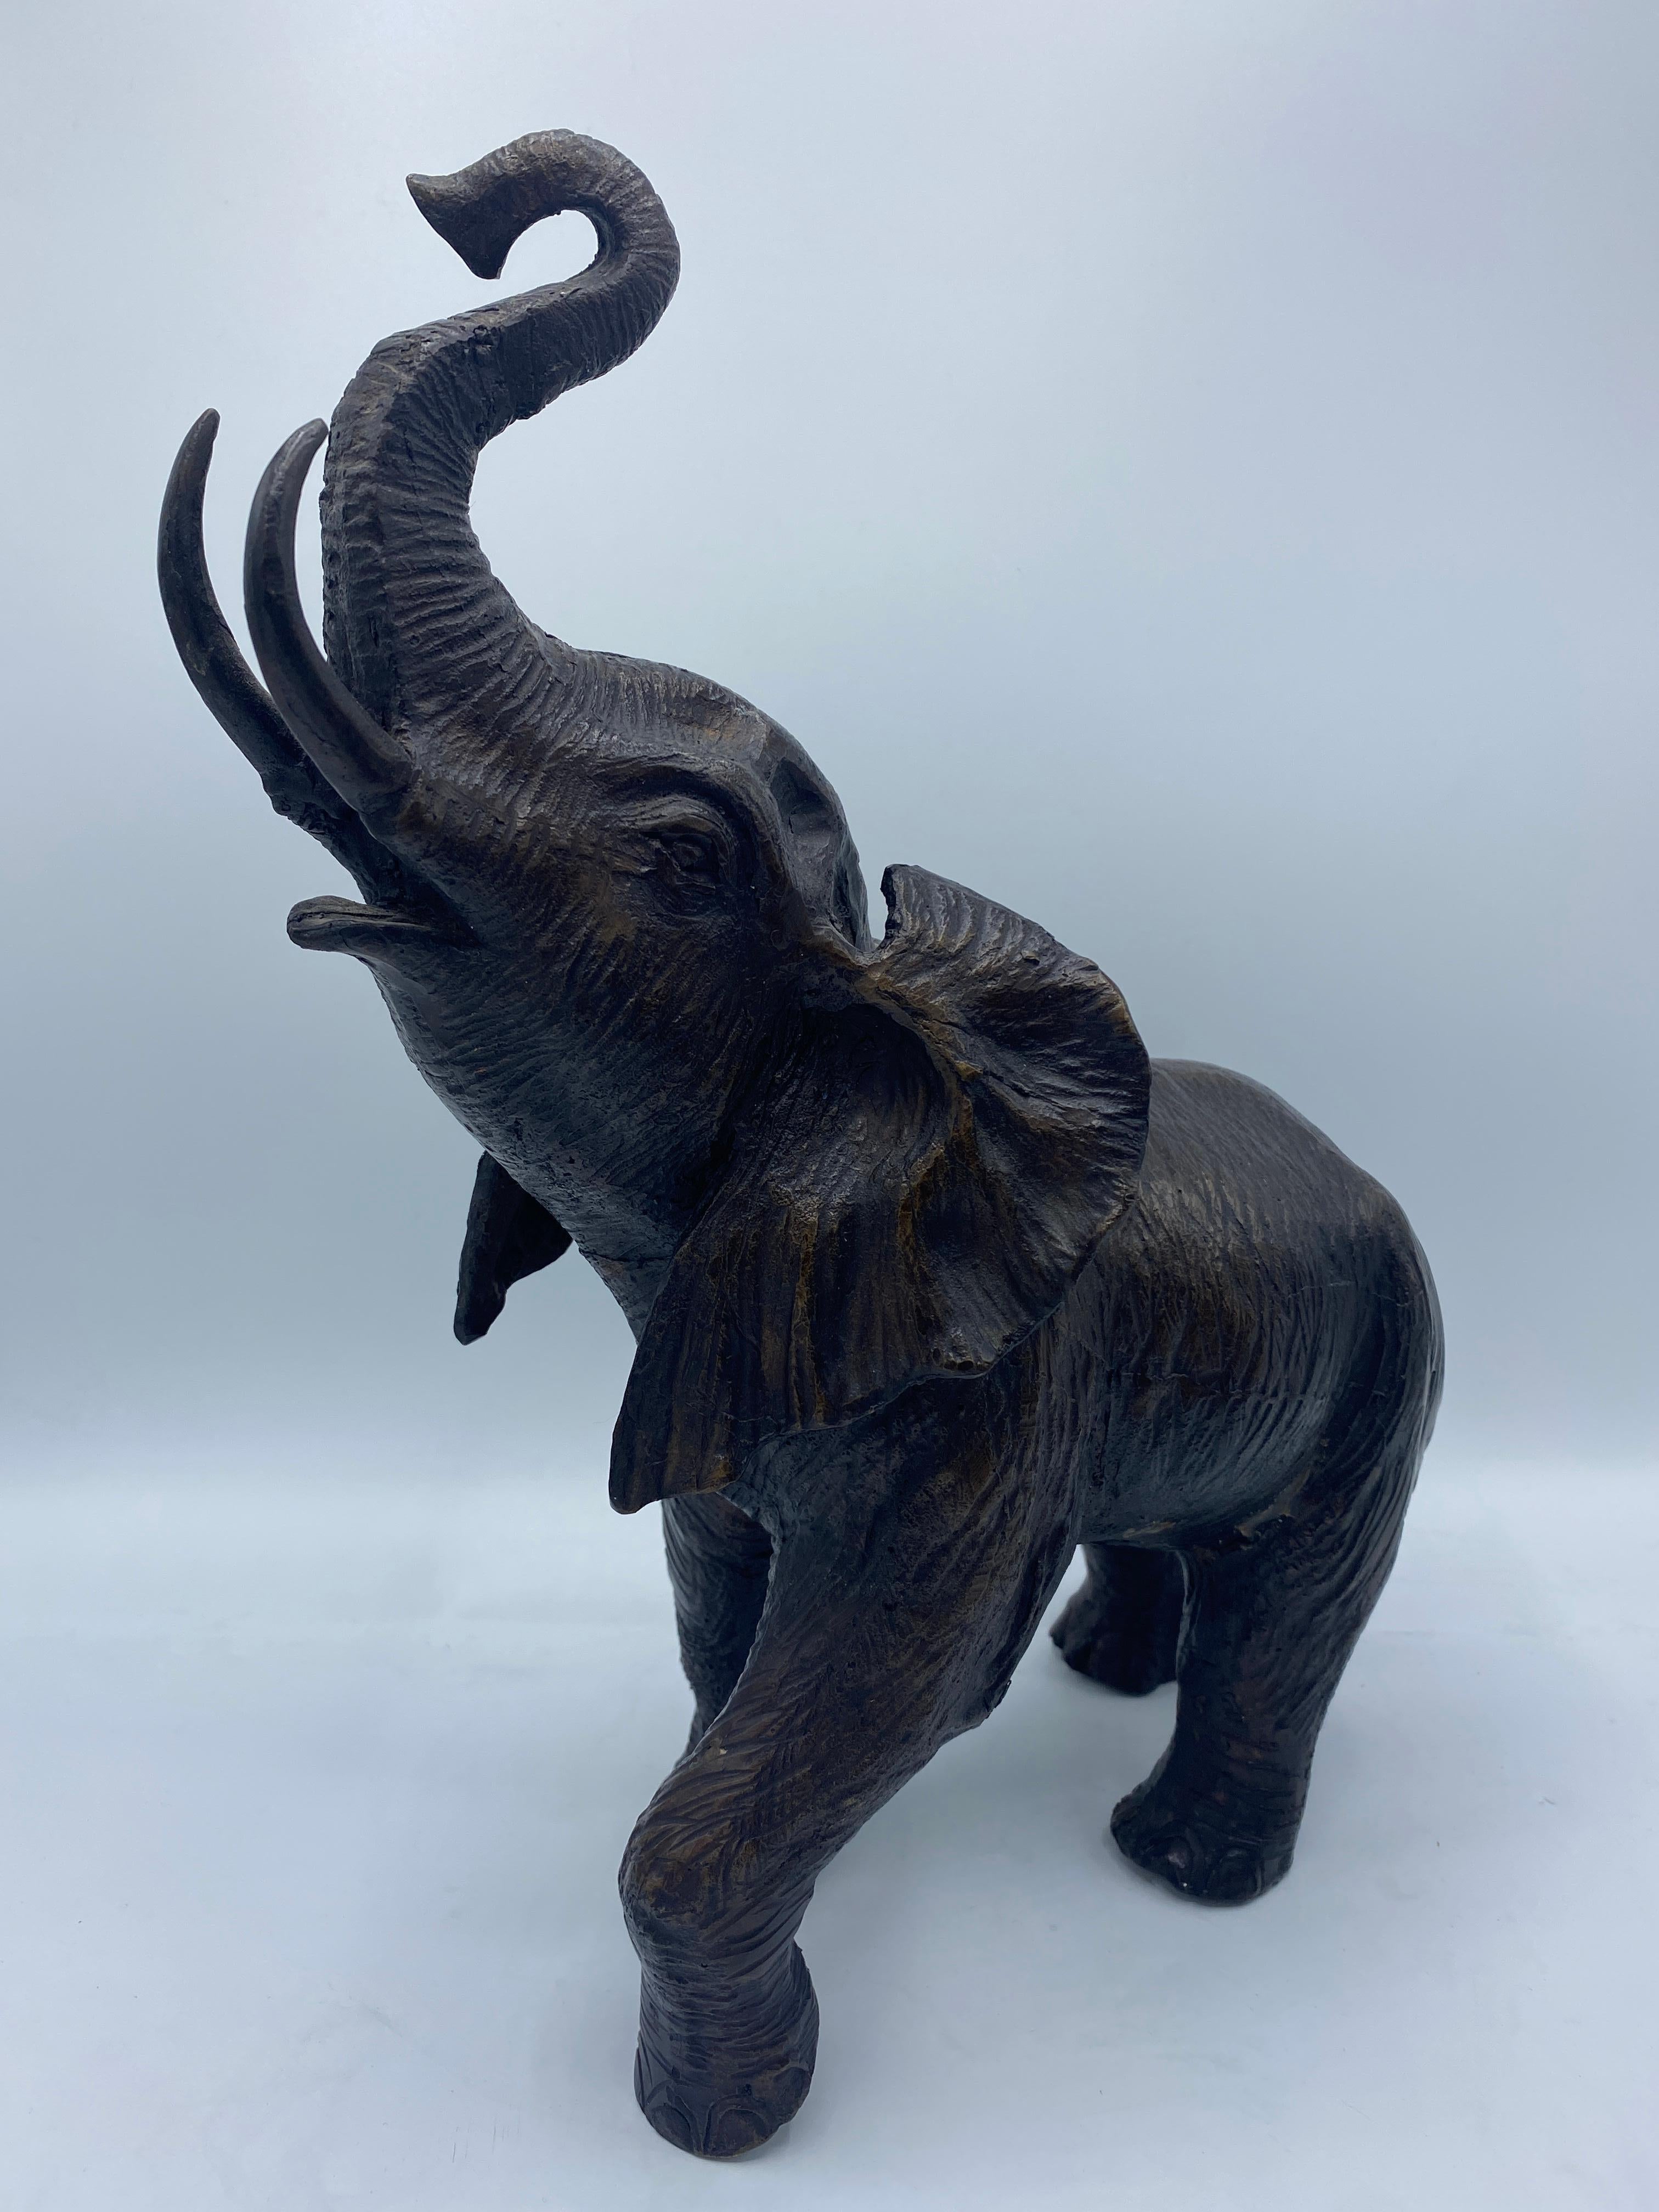 Pair of mid-century bronze elephant sculptures
1940s - 1960s 
Measure: 13